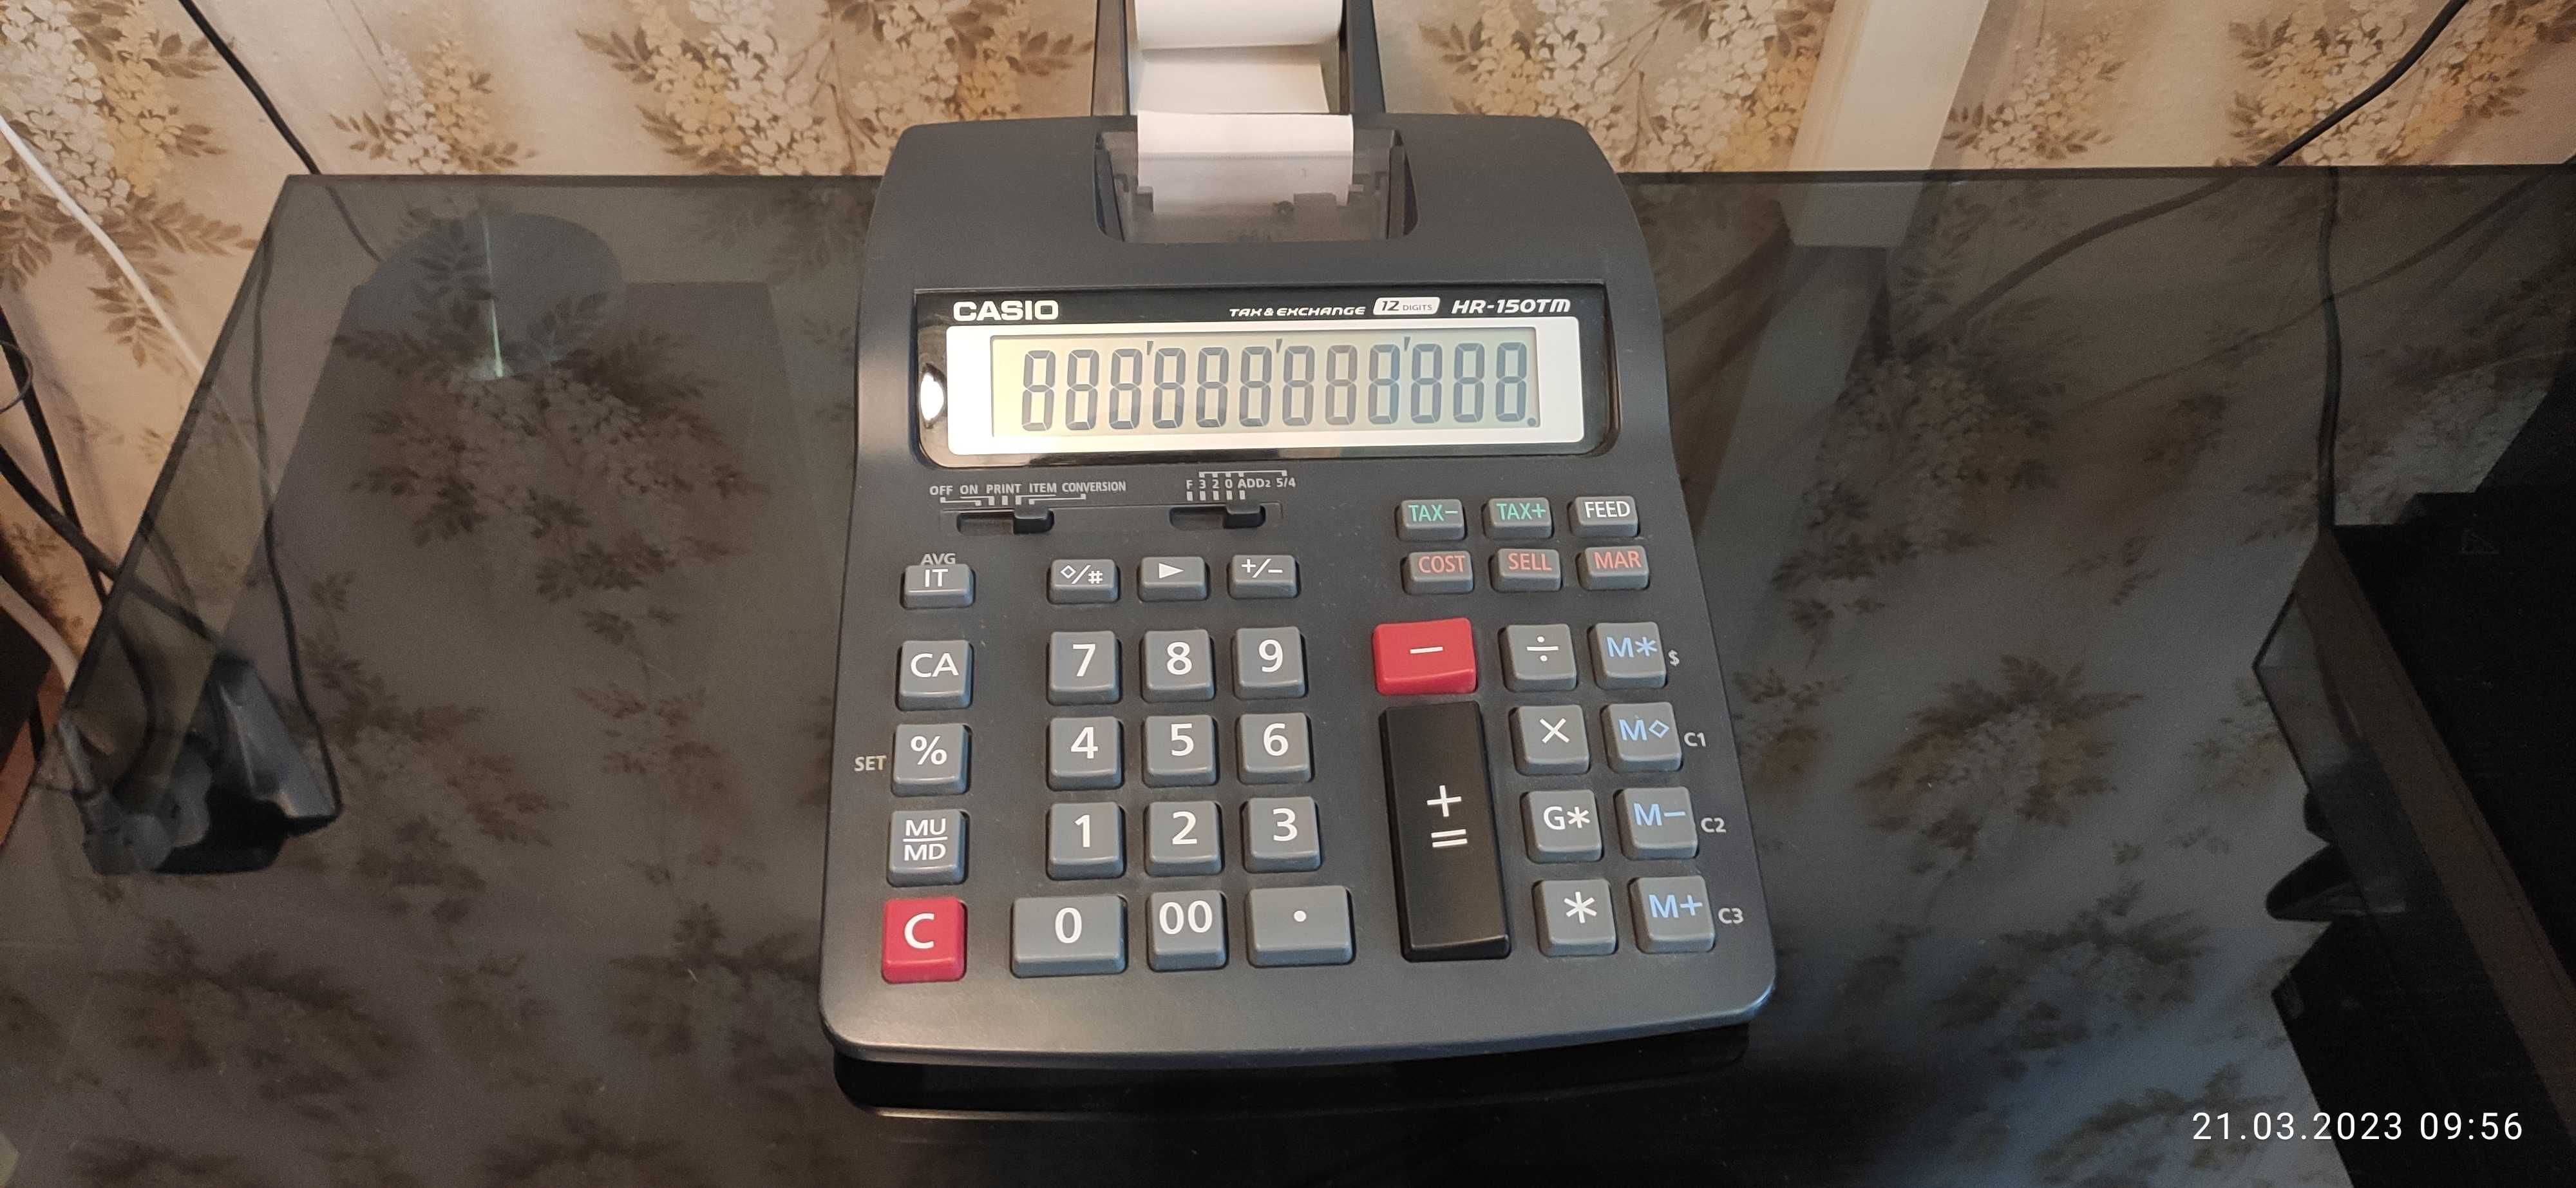 Casio HR-150TM  печатающий калькулятор